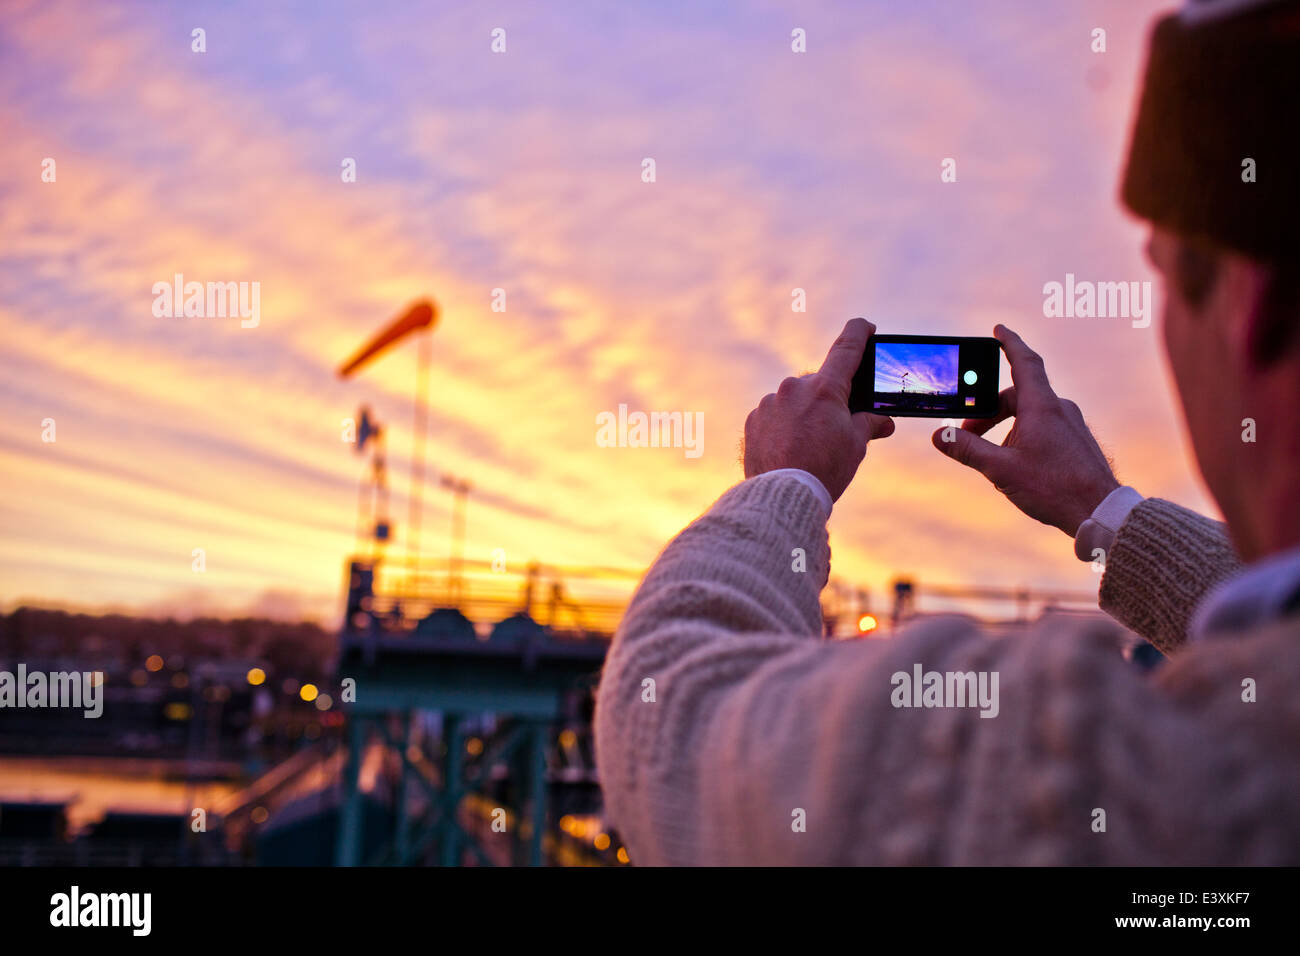 Man taking picture of sunset over bridge Stock Photo